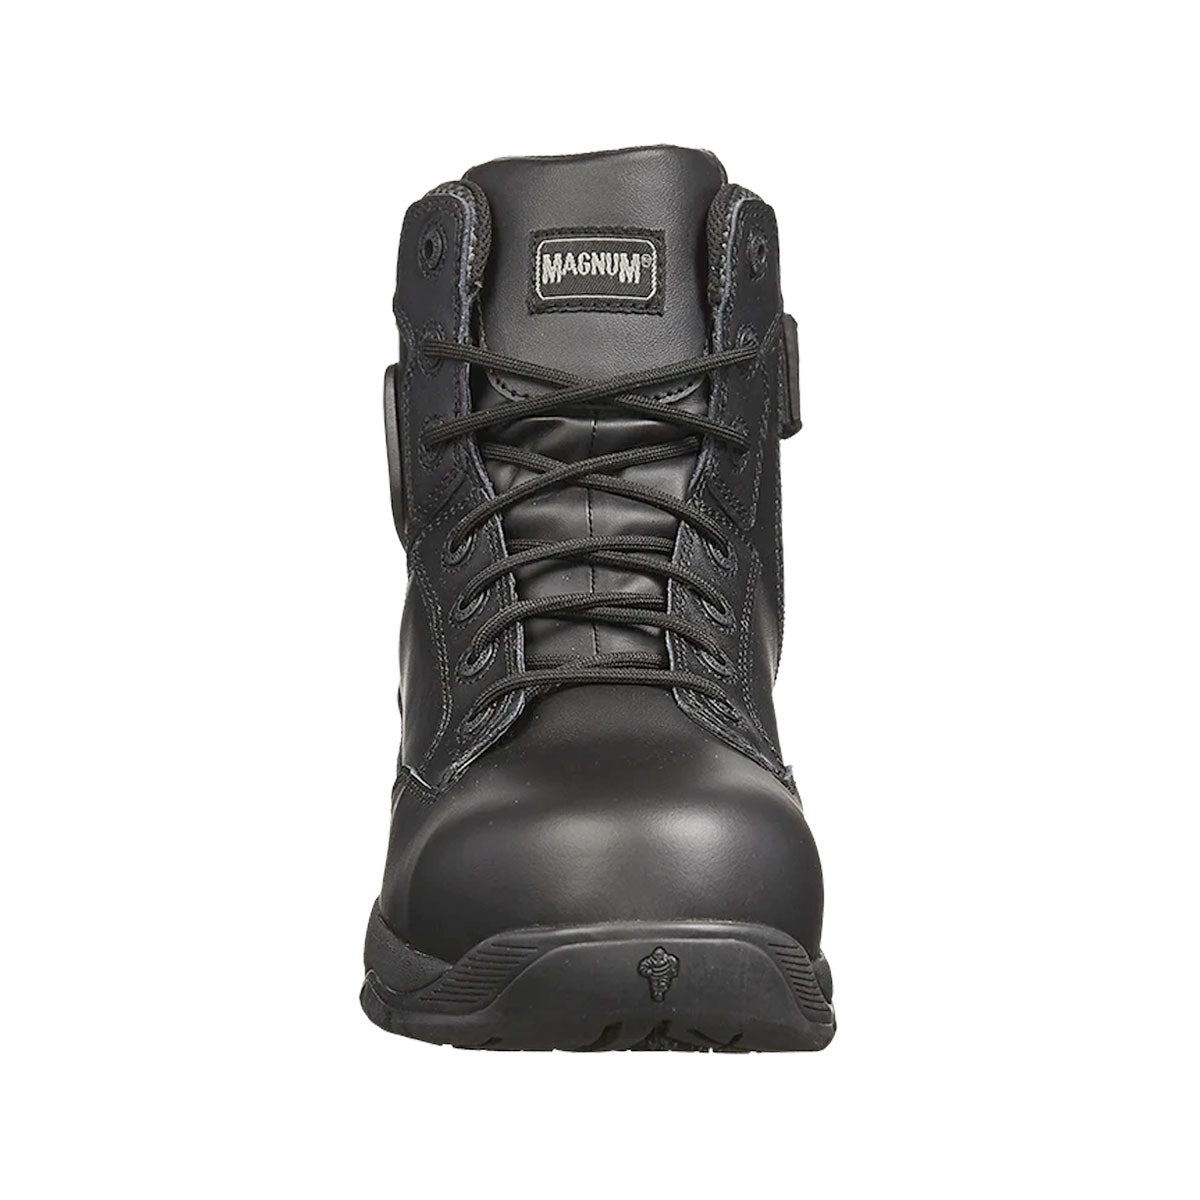 Magnum Strike Force 6.0 Leather Side-Zip Composite Toe Waterproof Women's Boot Black MSF655 Footwear Magnum Footwear Tactical Gear Supplier Tactical Distributors Australia